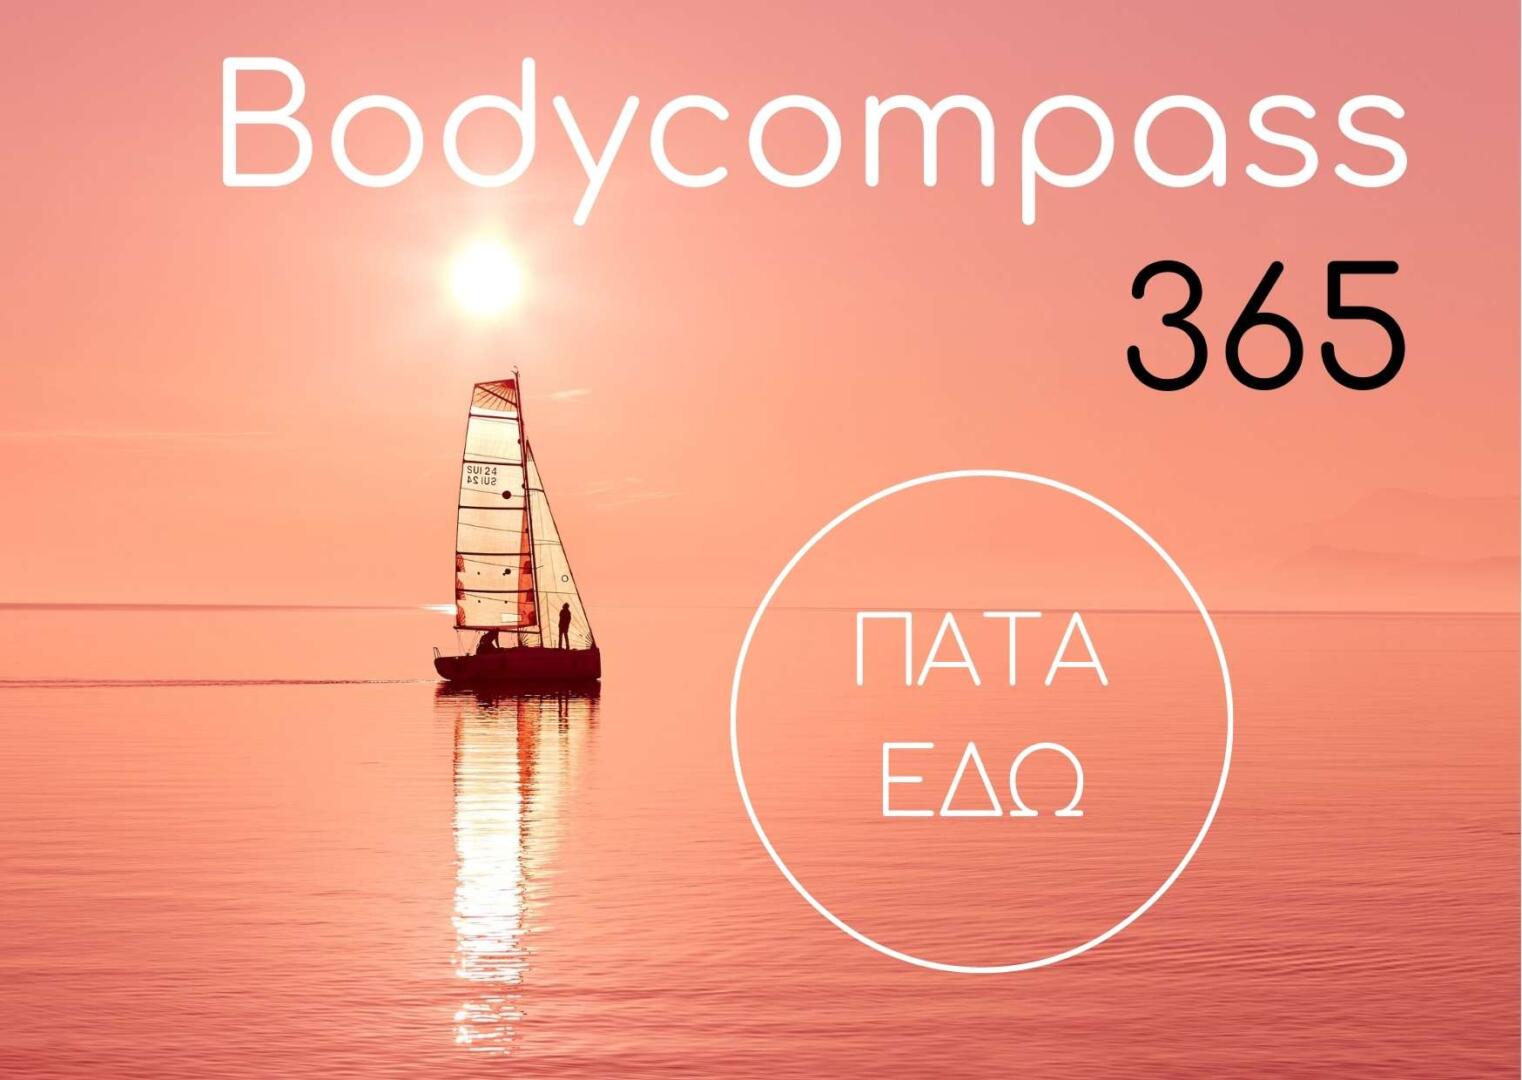 Bodycompass 365